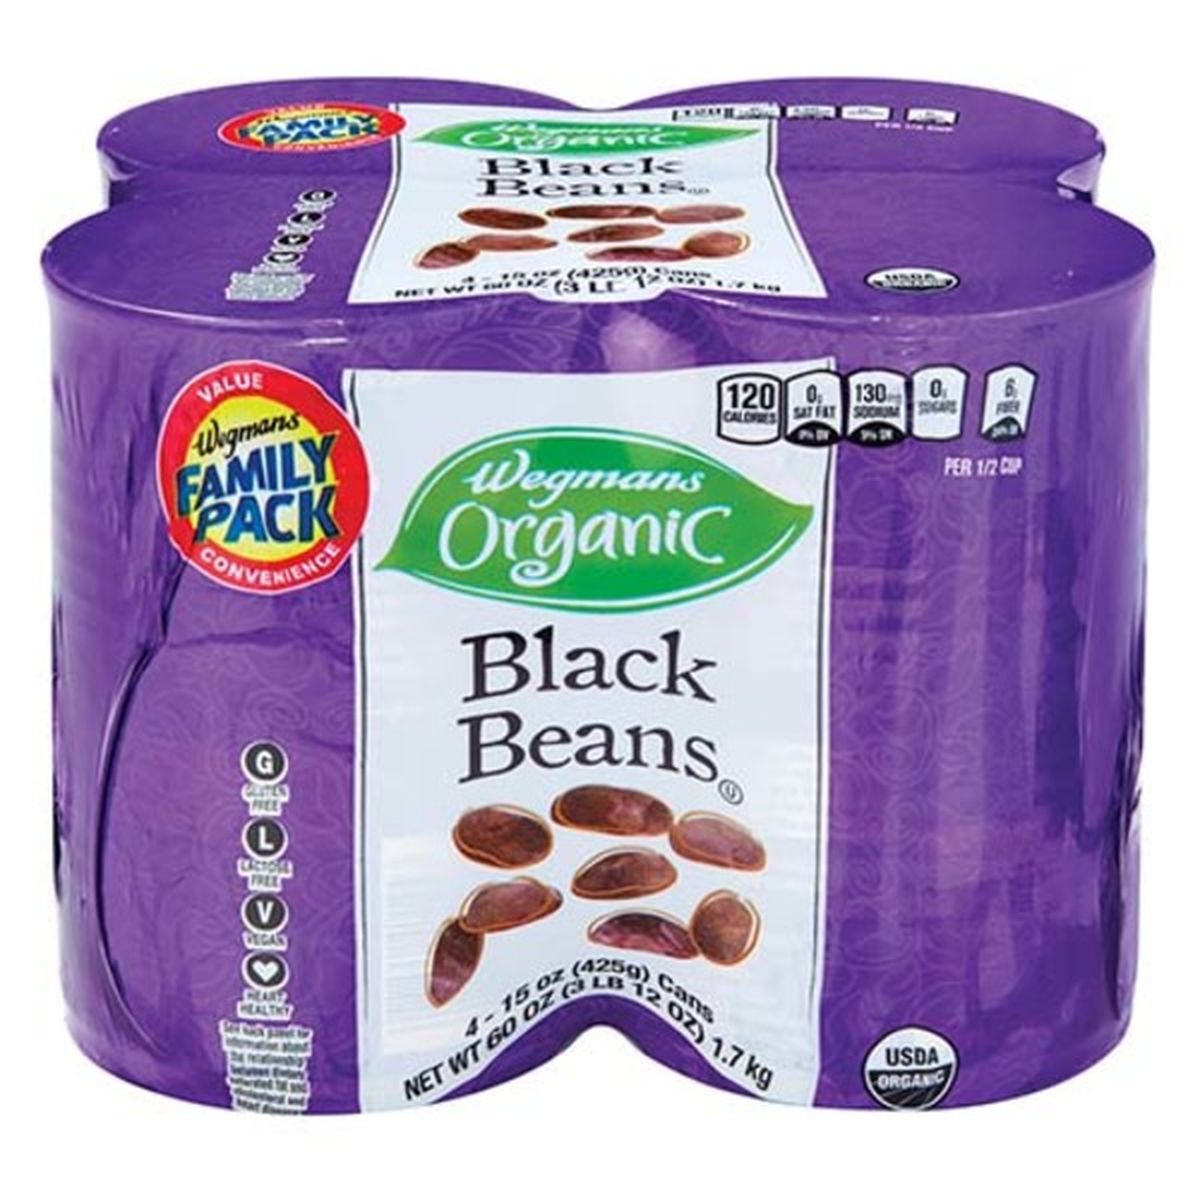 Calories in Wegmans Organic Black Beans, FAMILY PACK